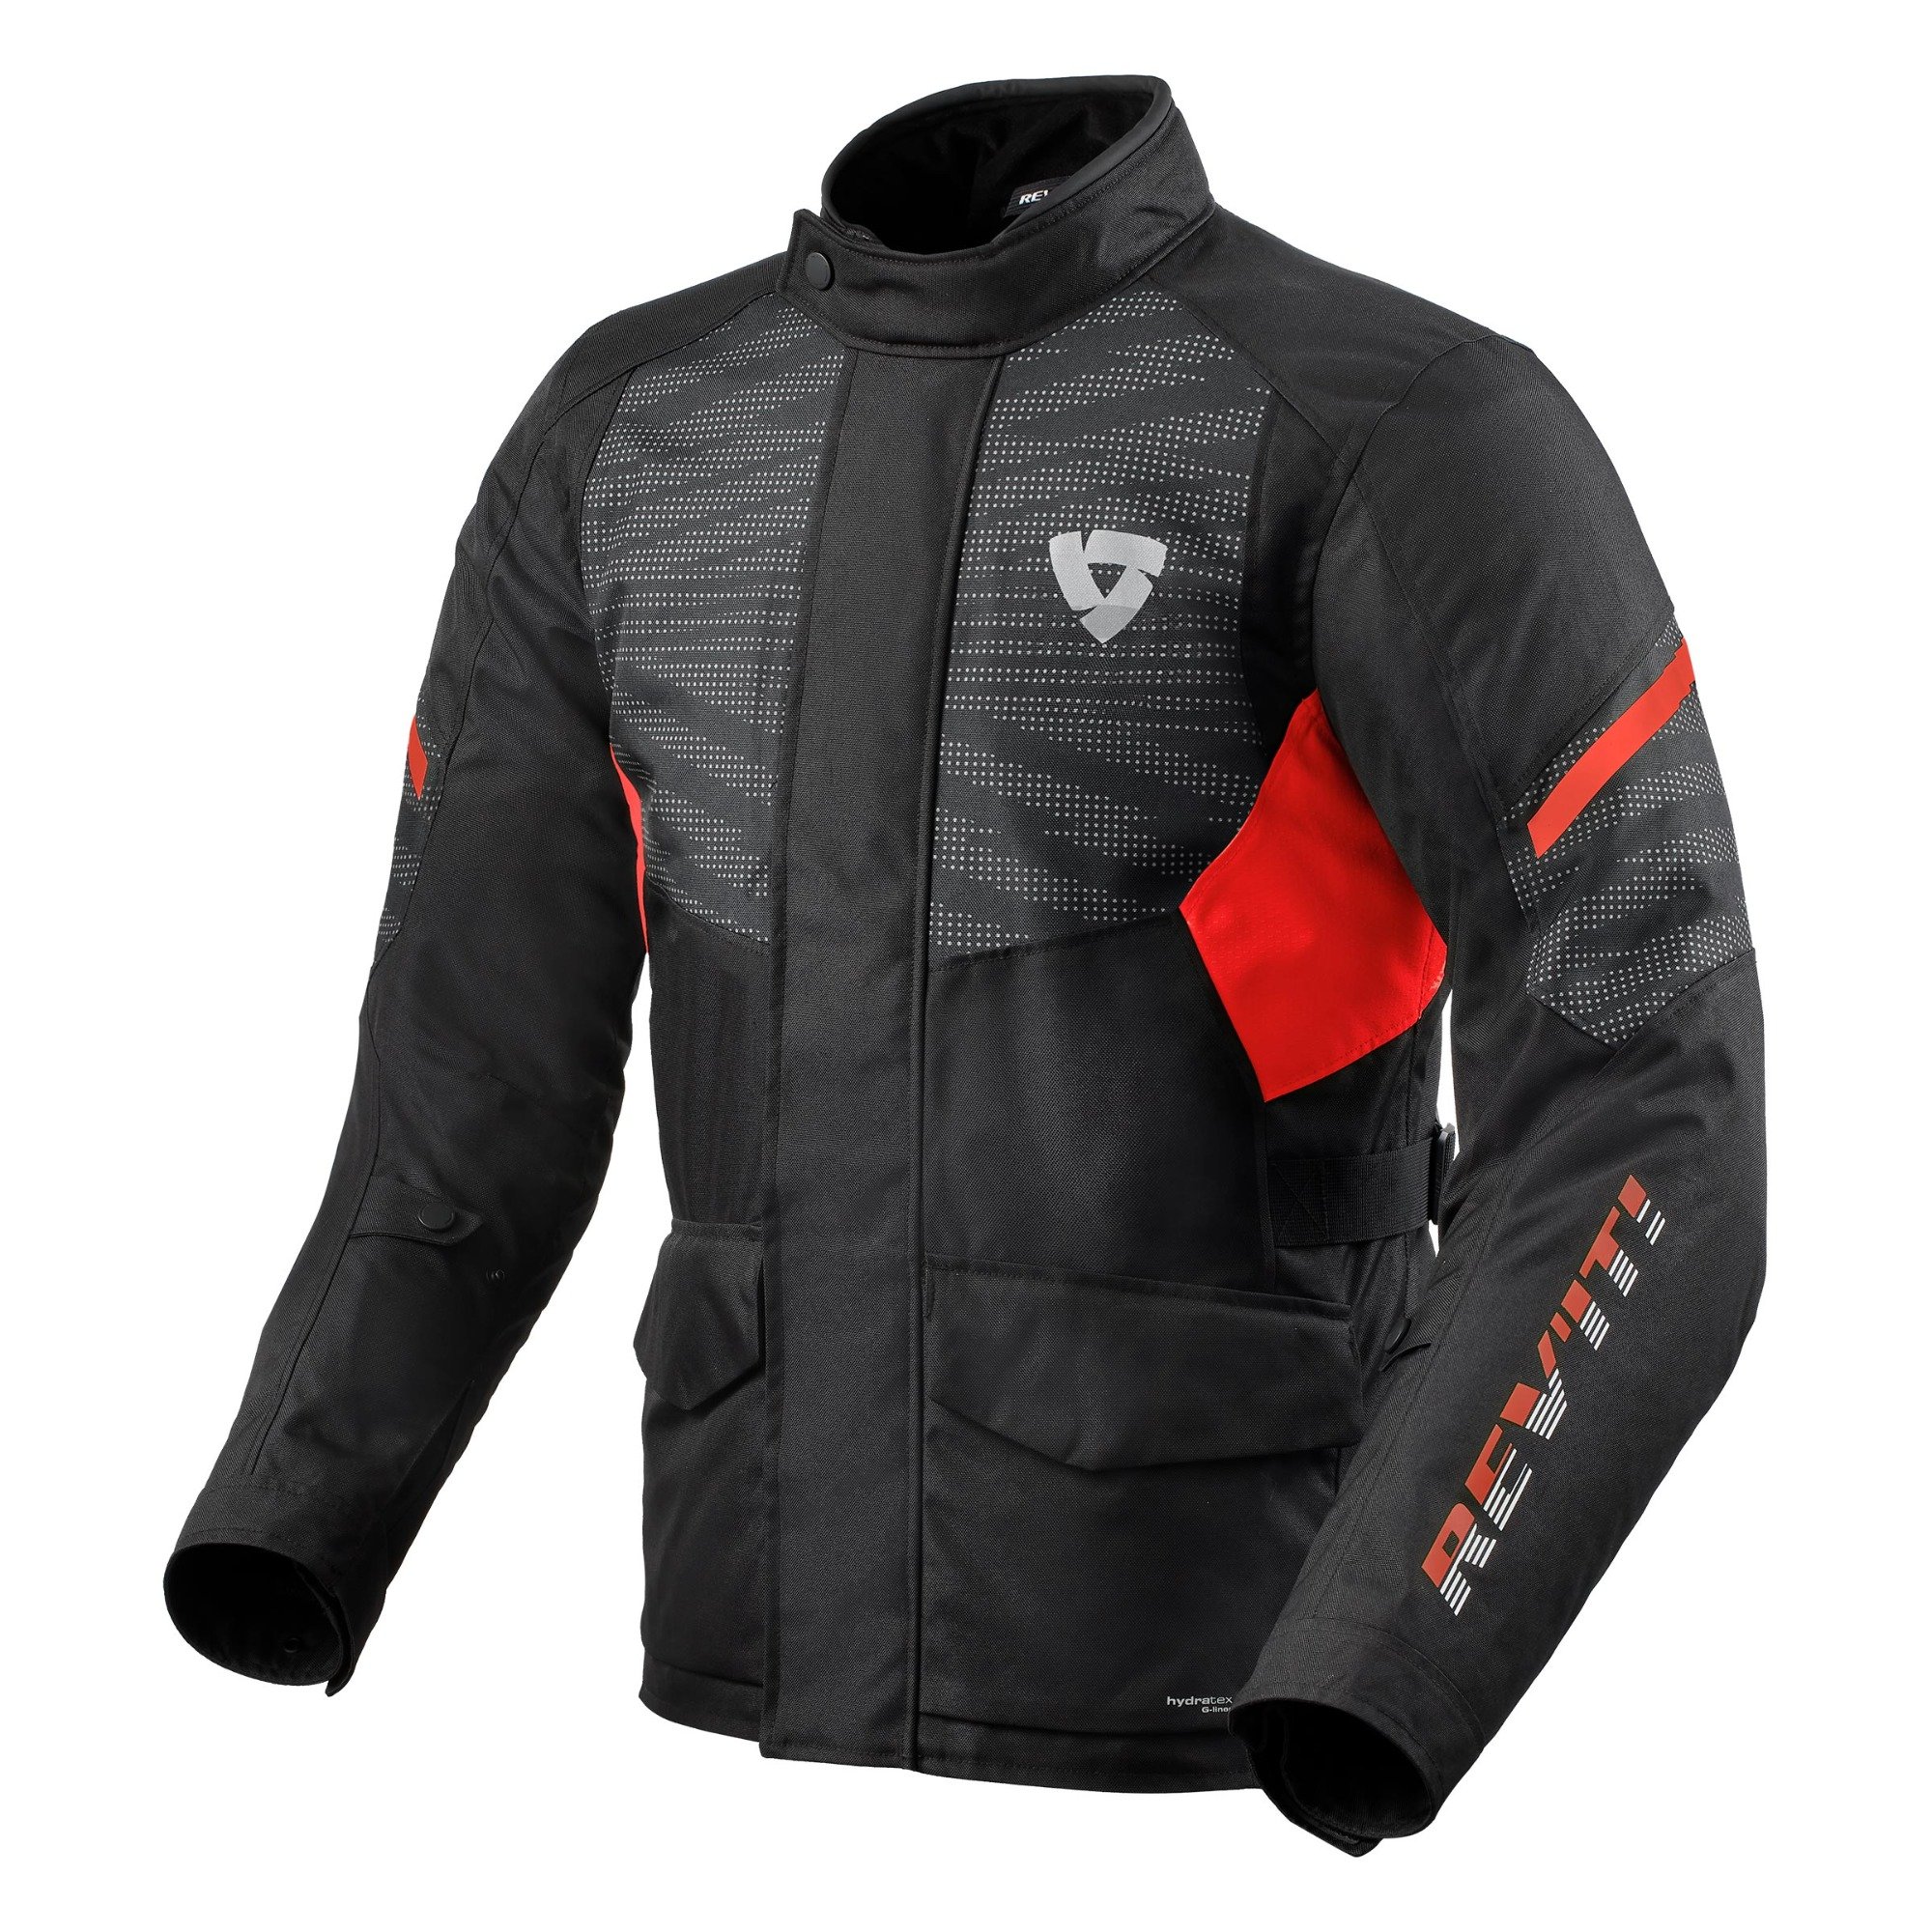 Image of REV'IT! Duke H2O Jacket Black Red Size M ID 8700001332033